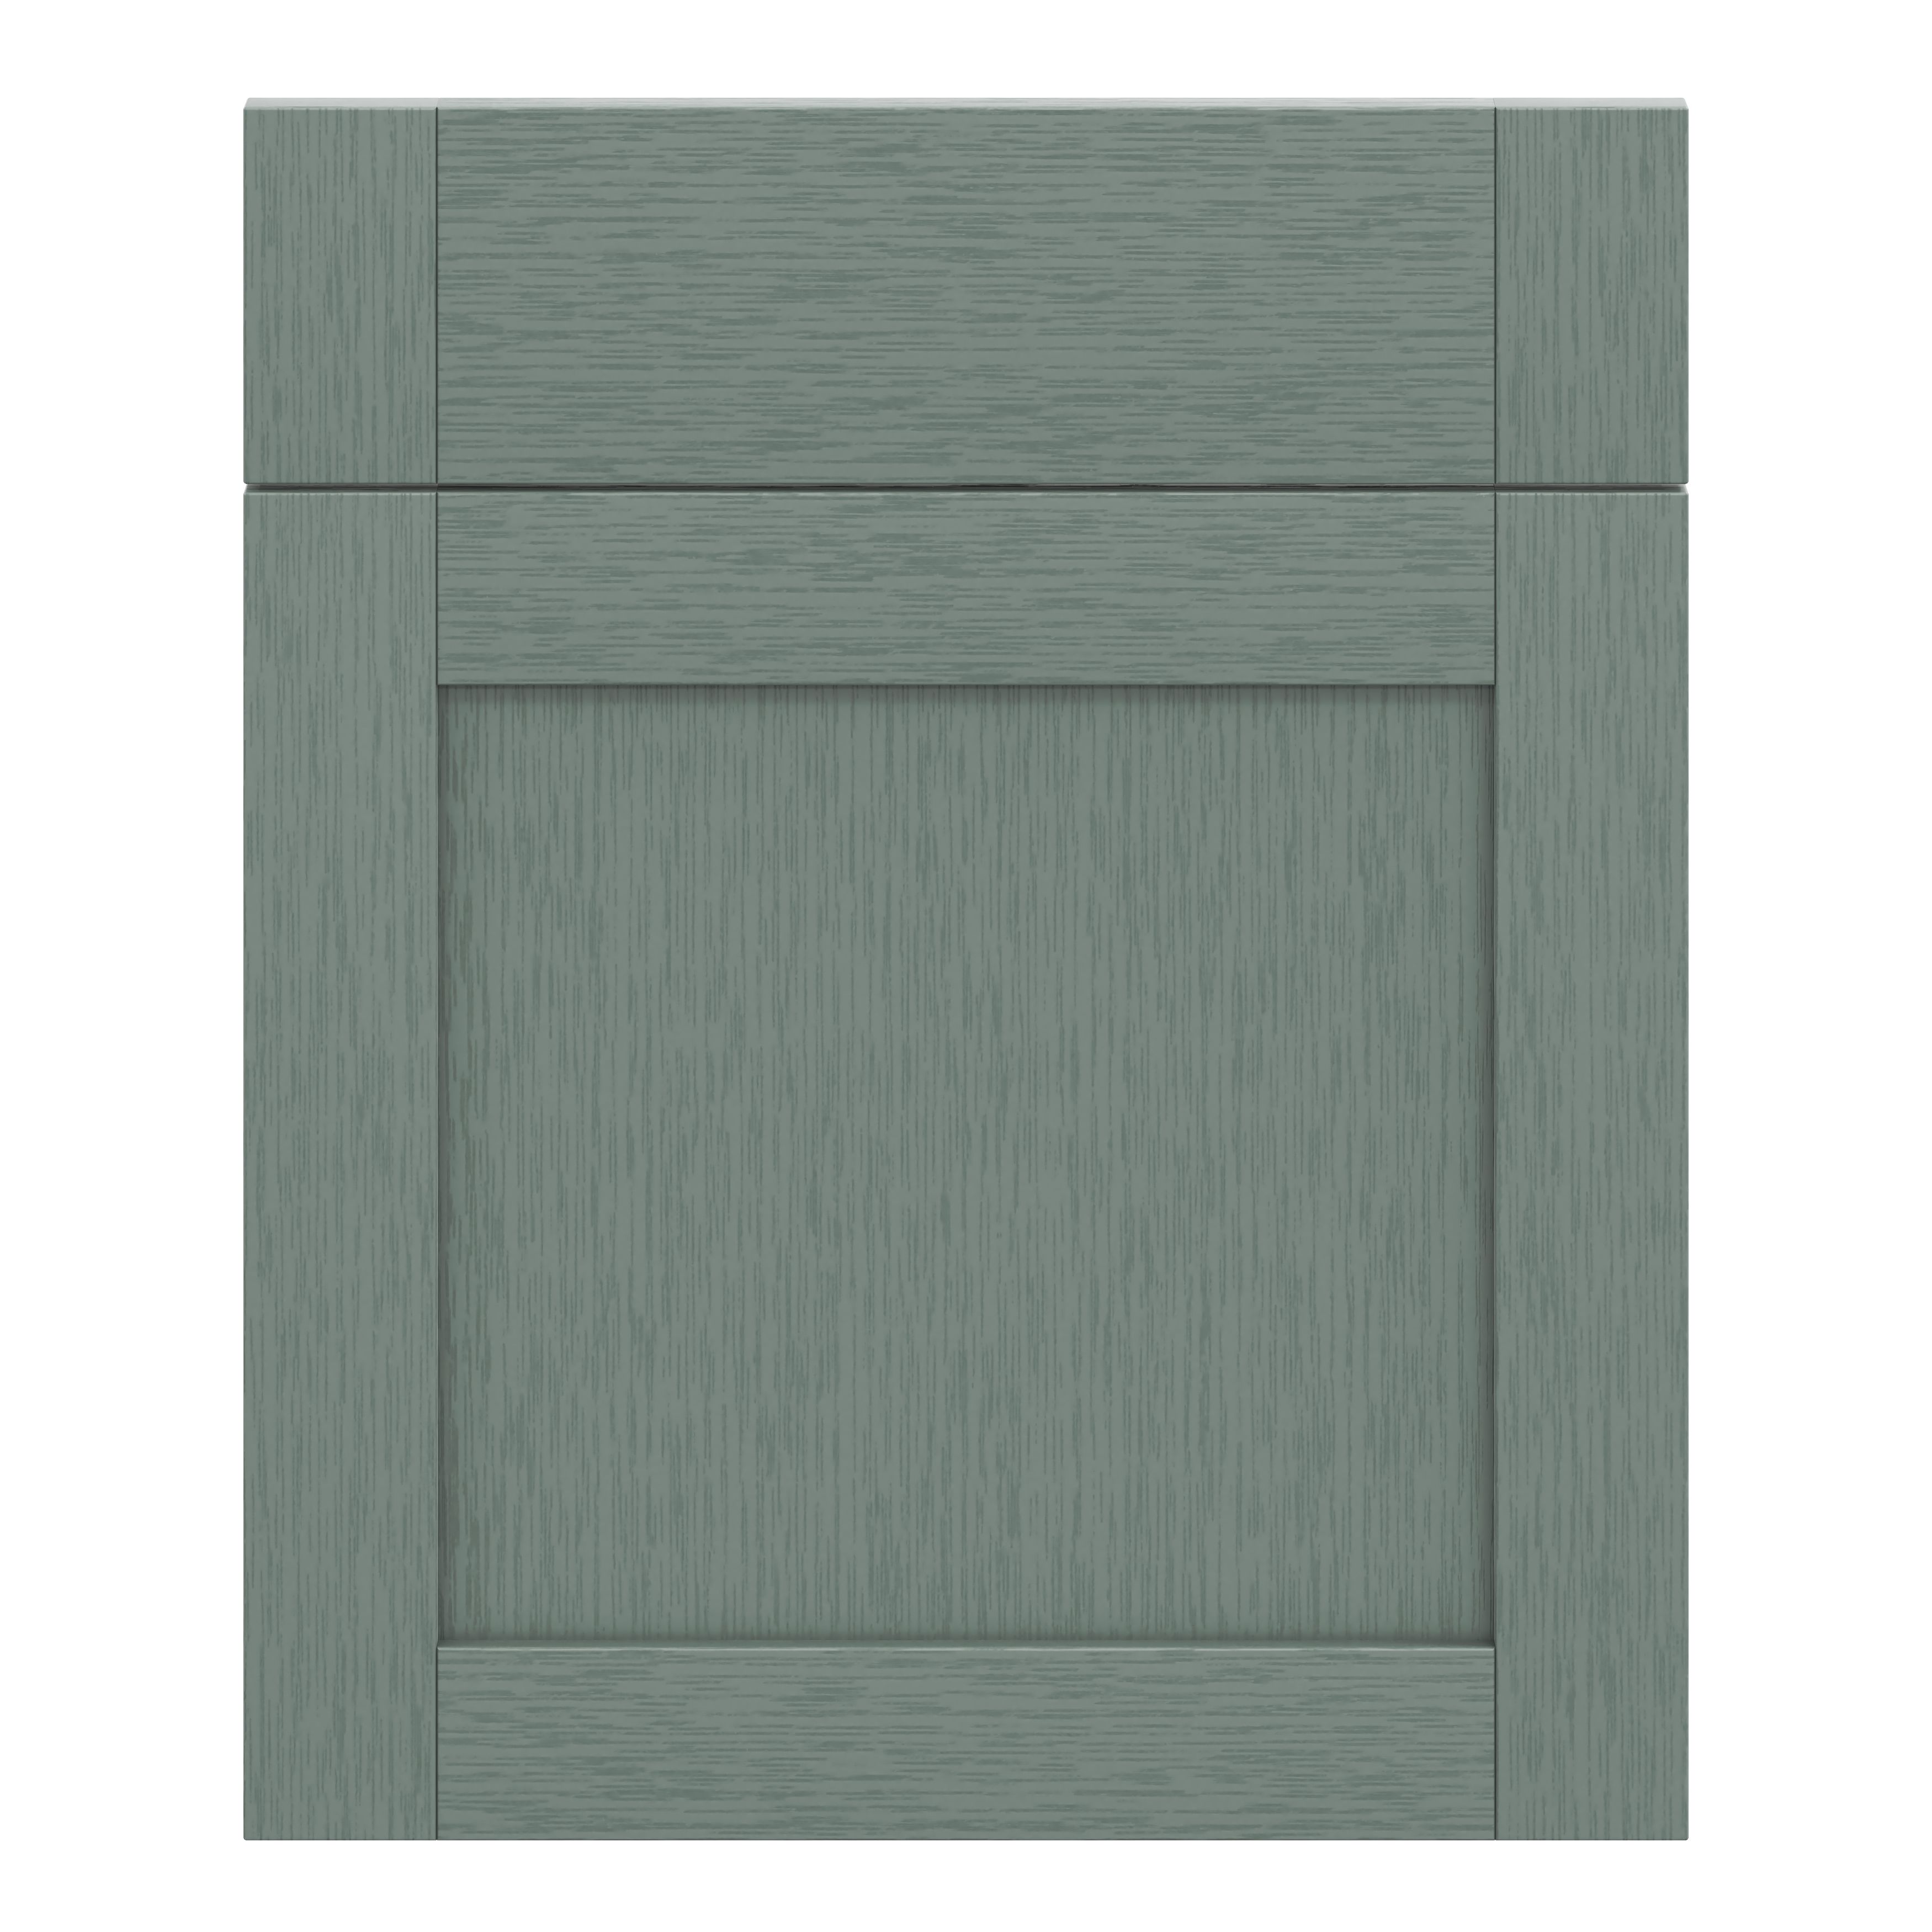 GoodHome Alpinia Matt green wood effect Drawerline door & drawer front, (W)600mm (H)715mm (T)18mm